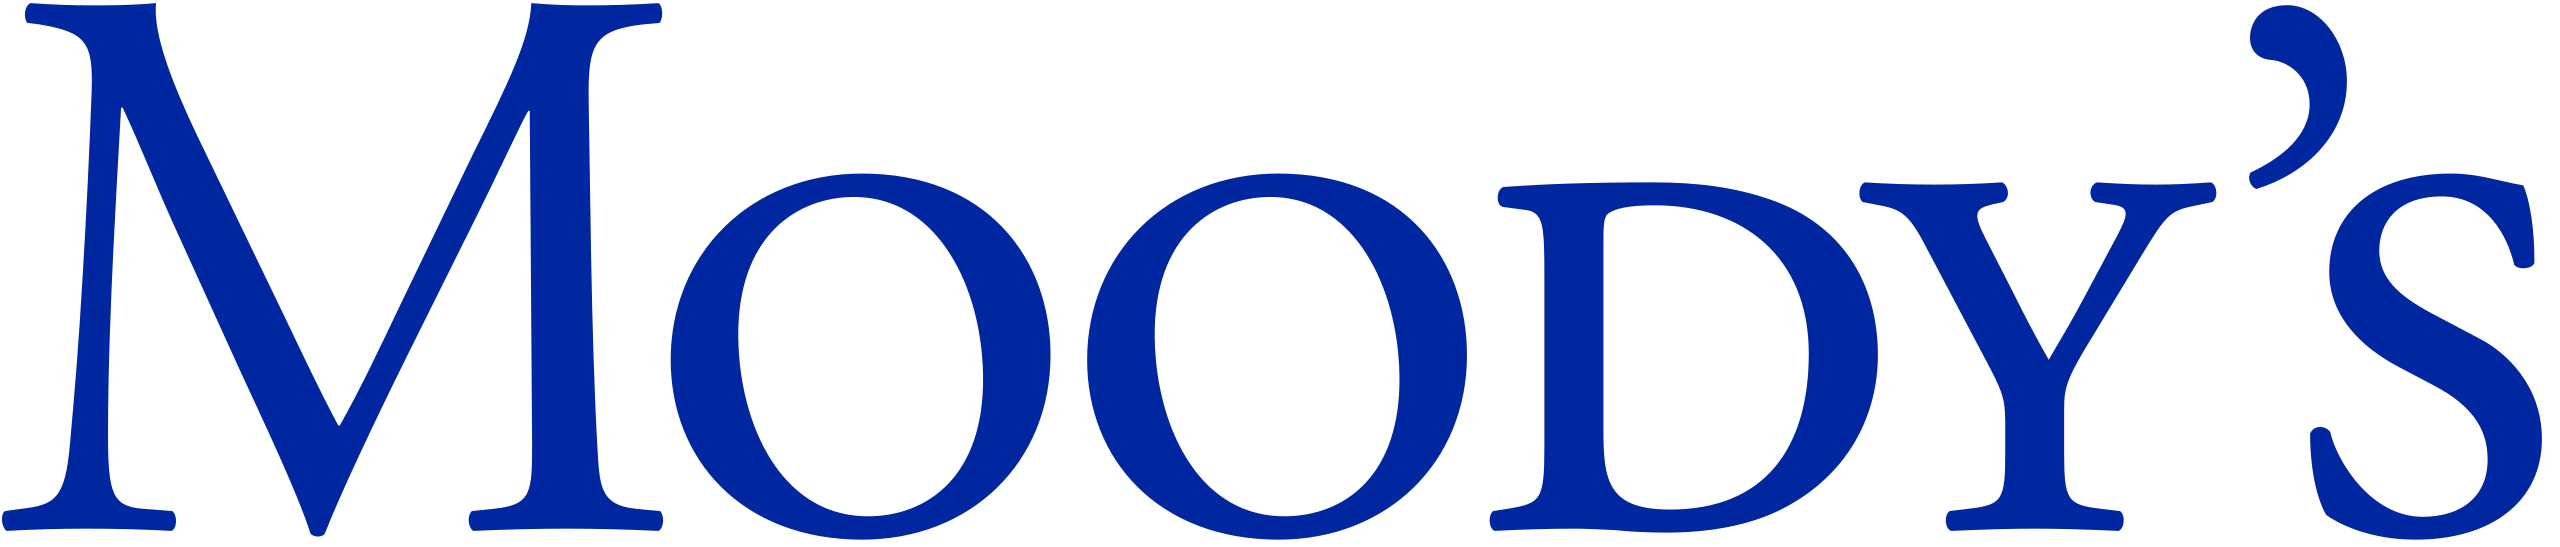 Moodys_logo